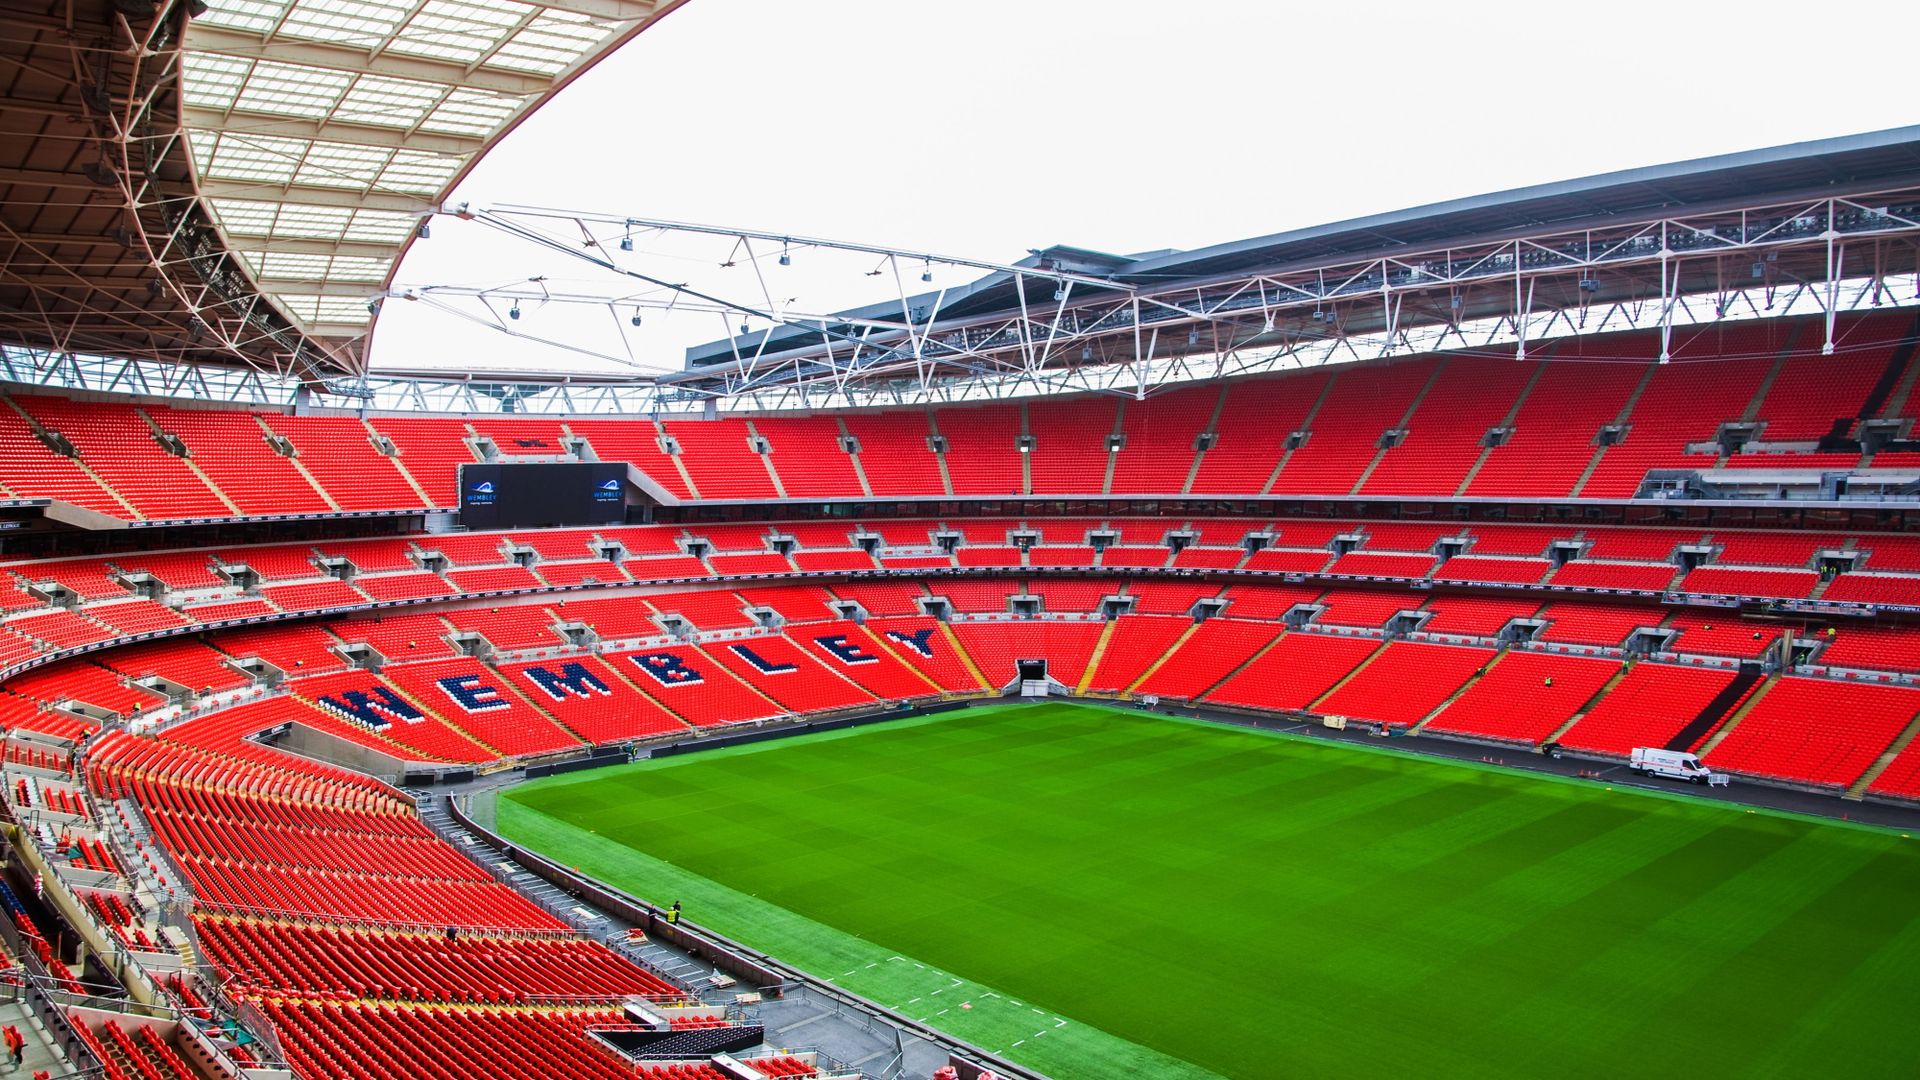 Wembley arena. Стадион «Уэмбли»,Англия. Стадион Лондон Стэдиум. Стадион Уэмбли 2023. Олд Траффорд стадион 2022.